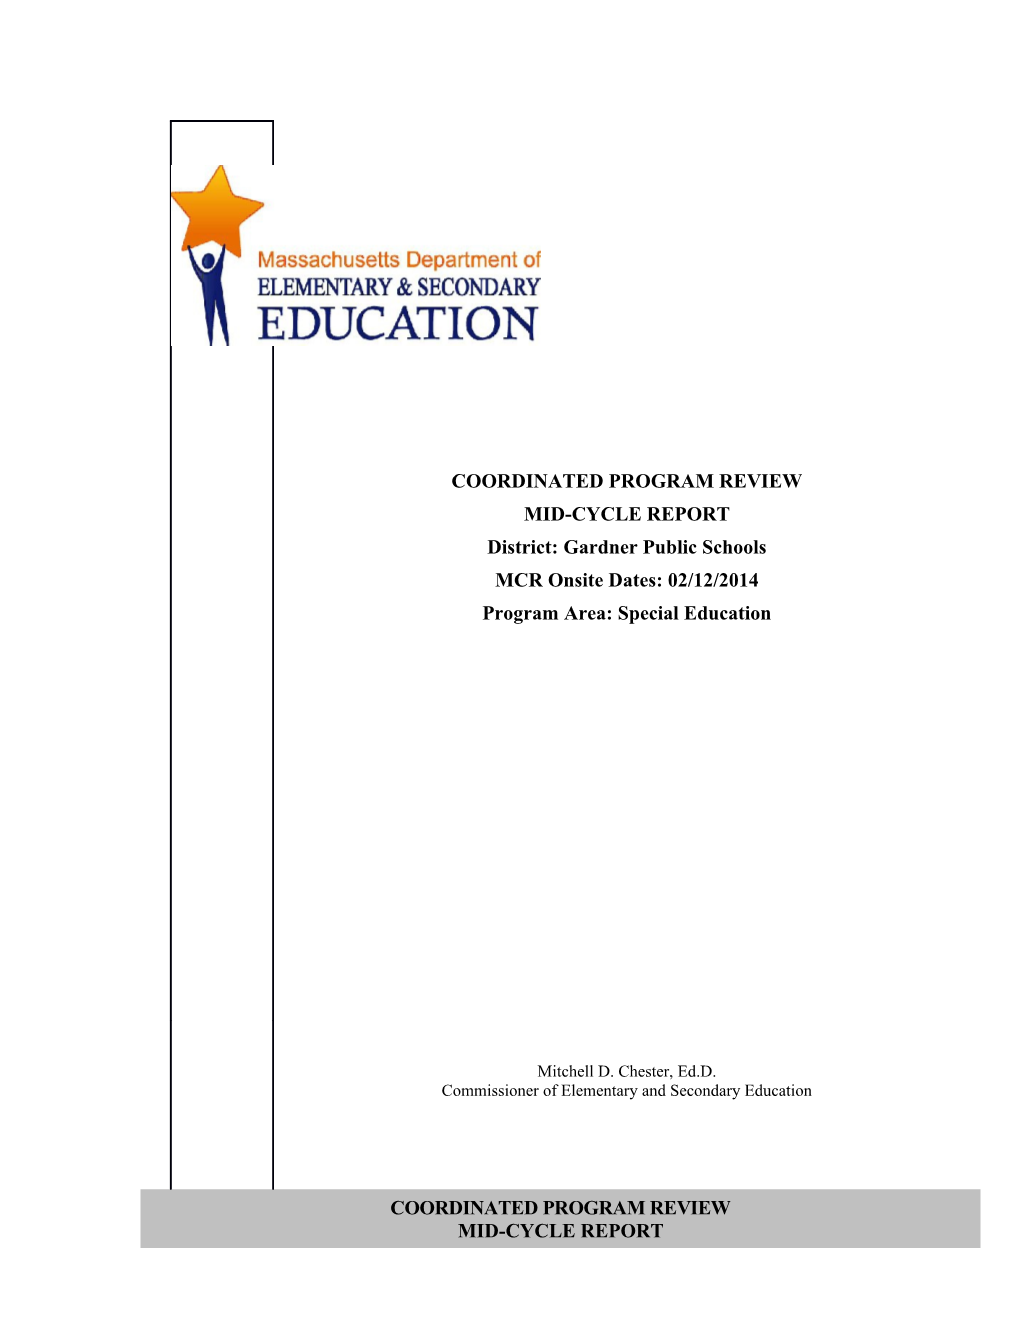 Gardner Public Schools Mid-Cycle Report 2014